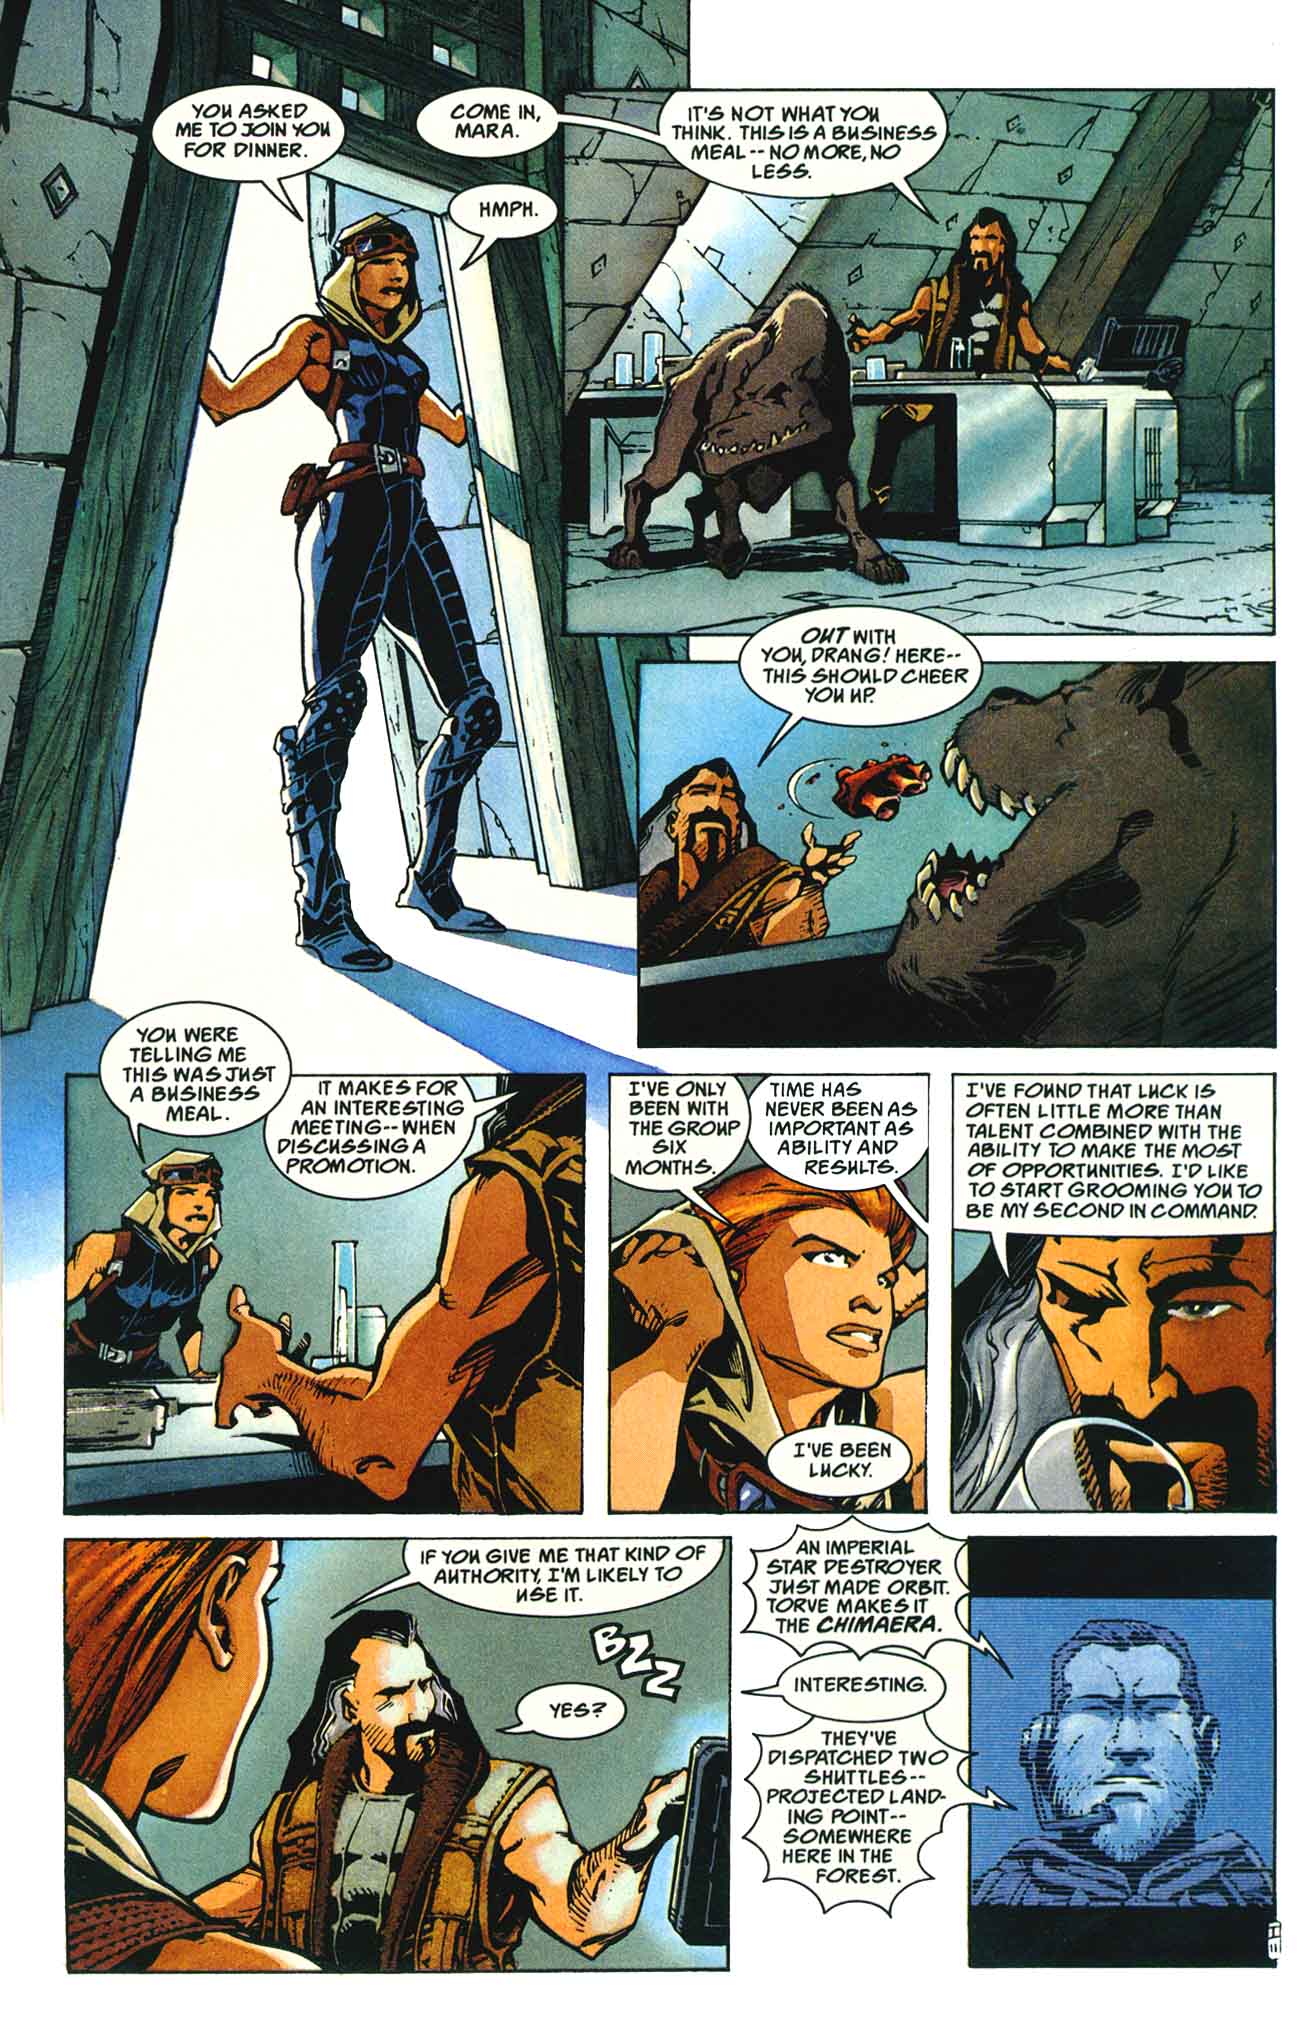 Heir to the empire comic pdf